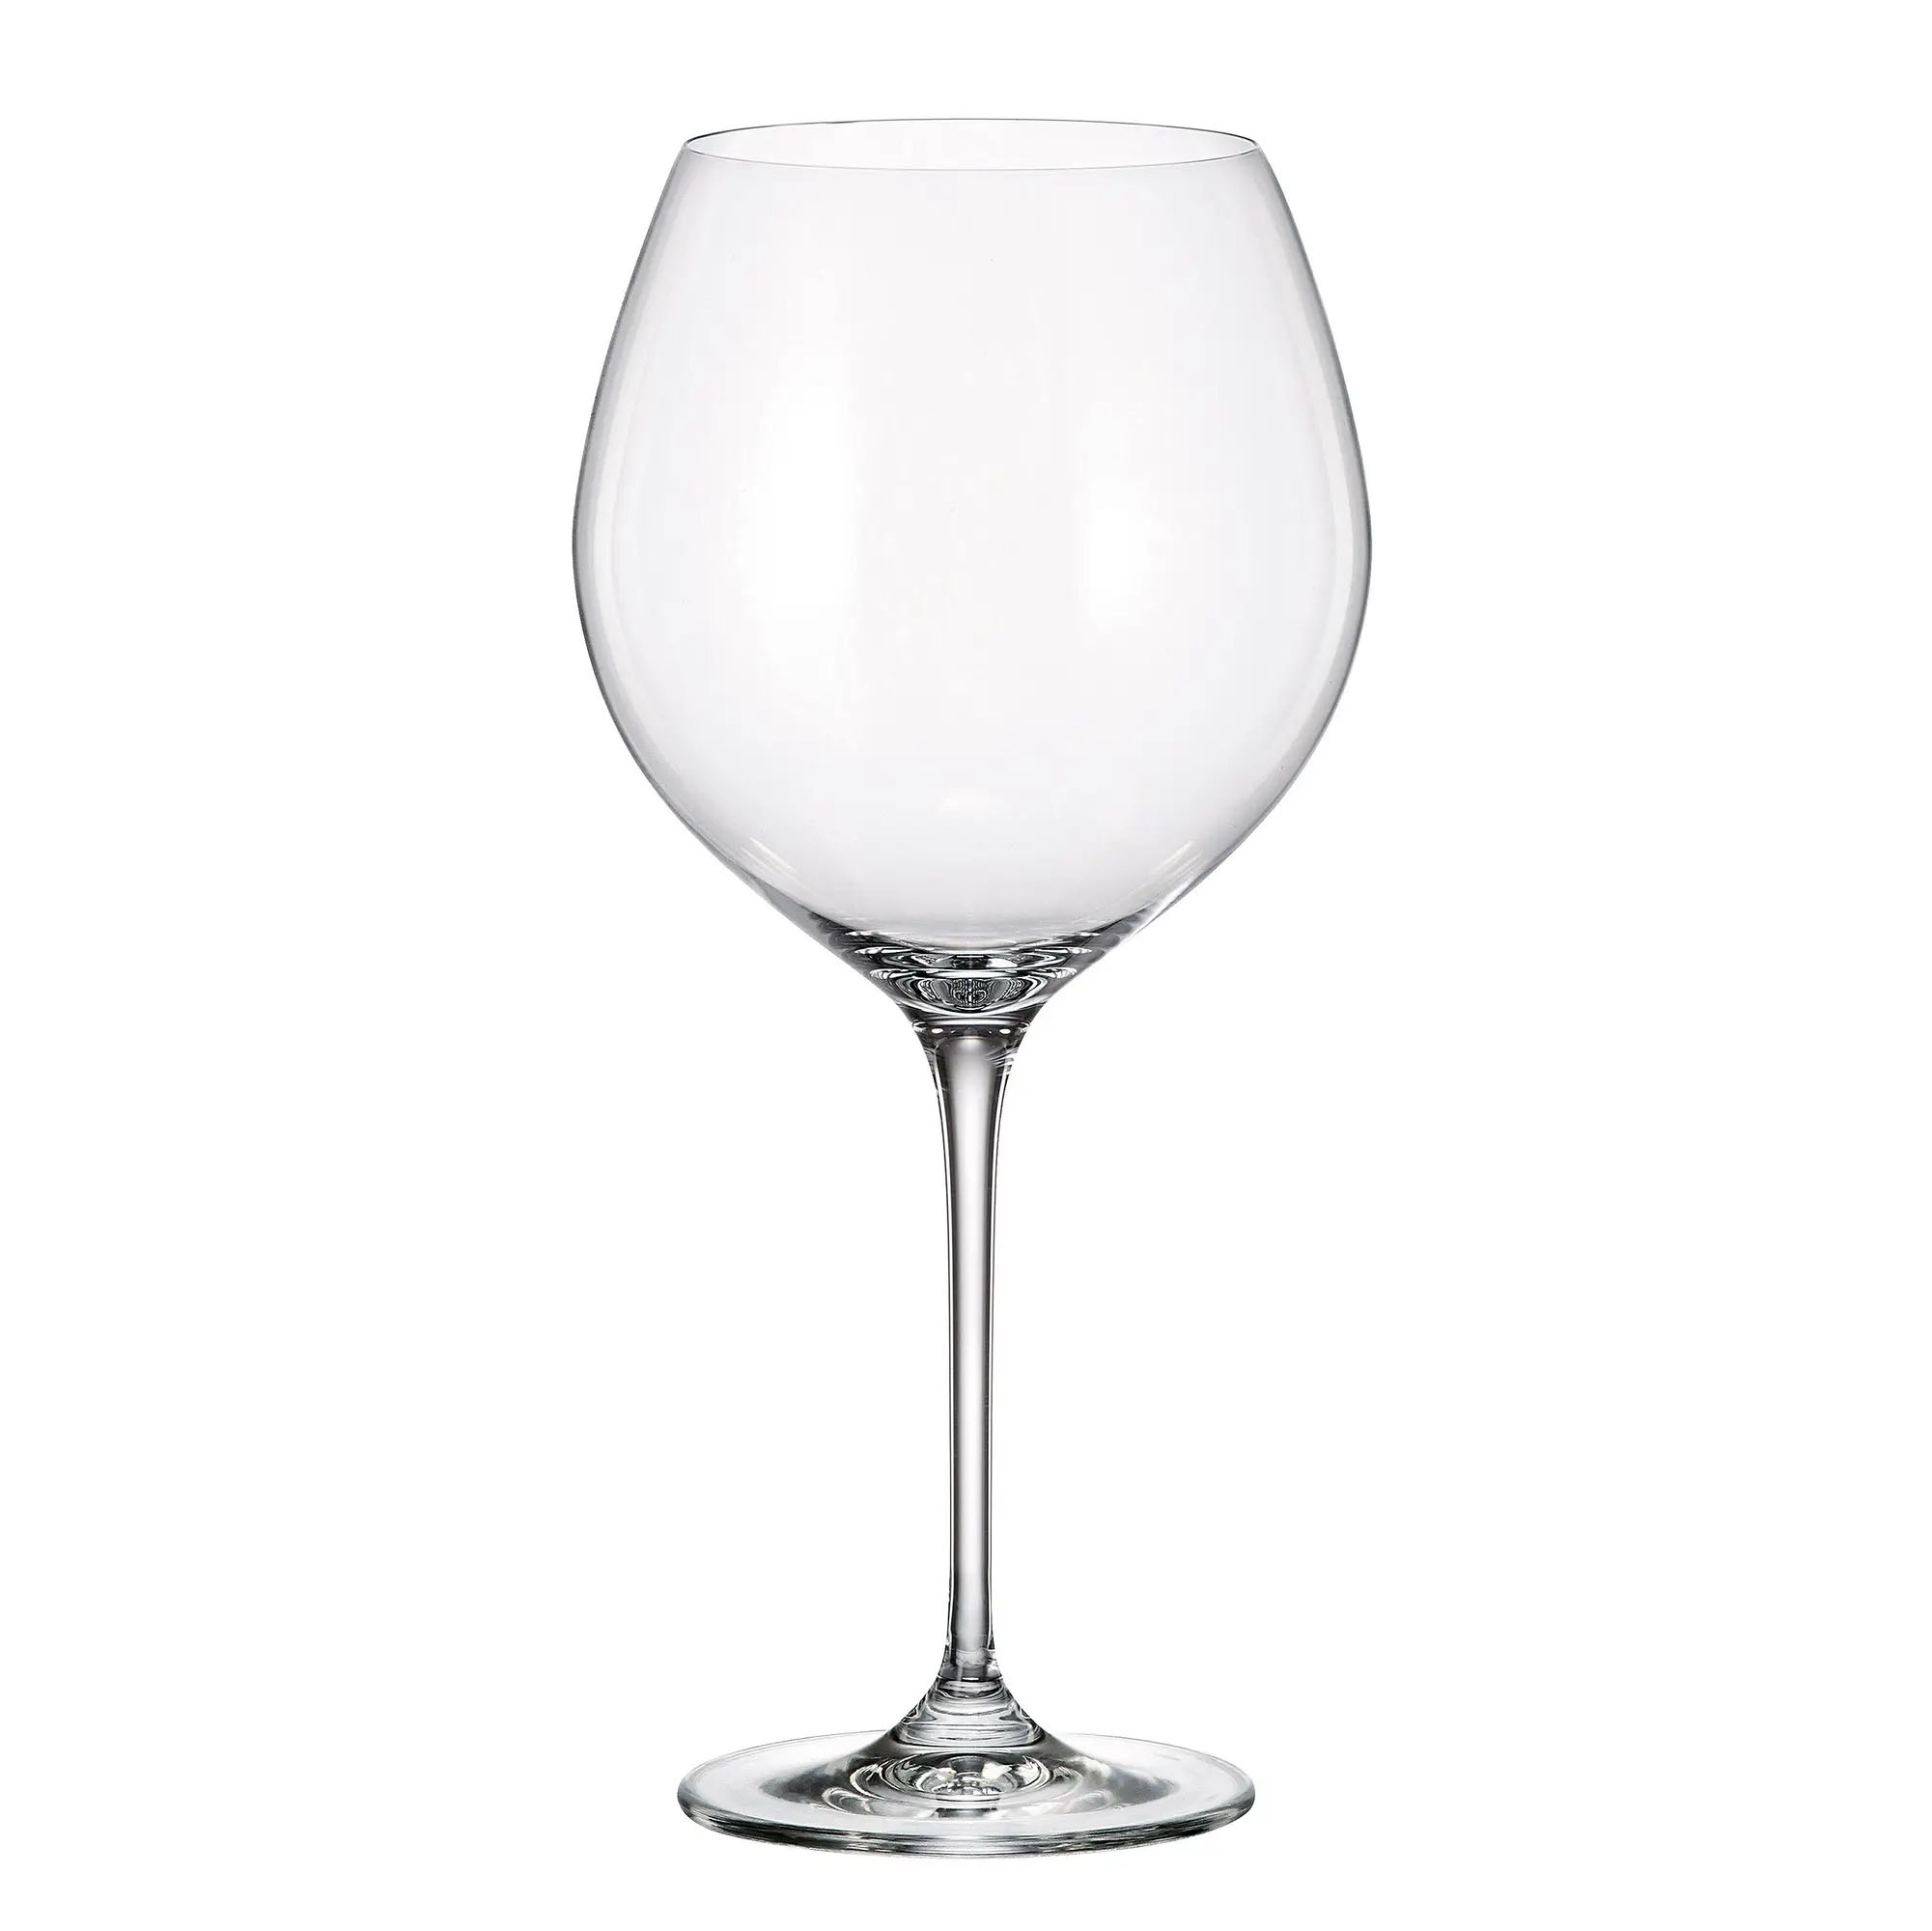 CYNA GLASS verre à vin rouge bourgogne cristal sans plomb collection URIA 750ml carre